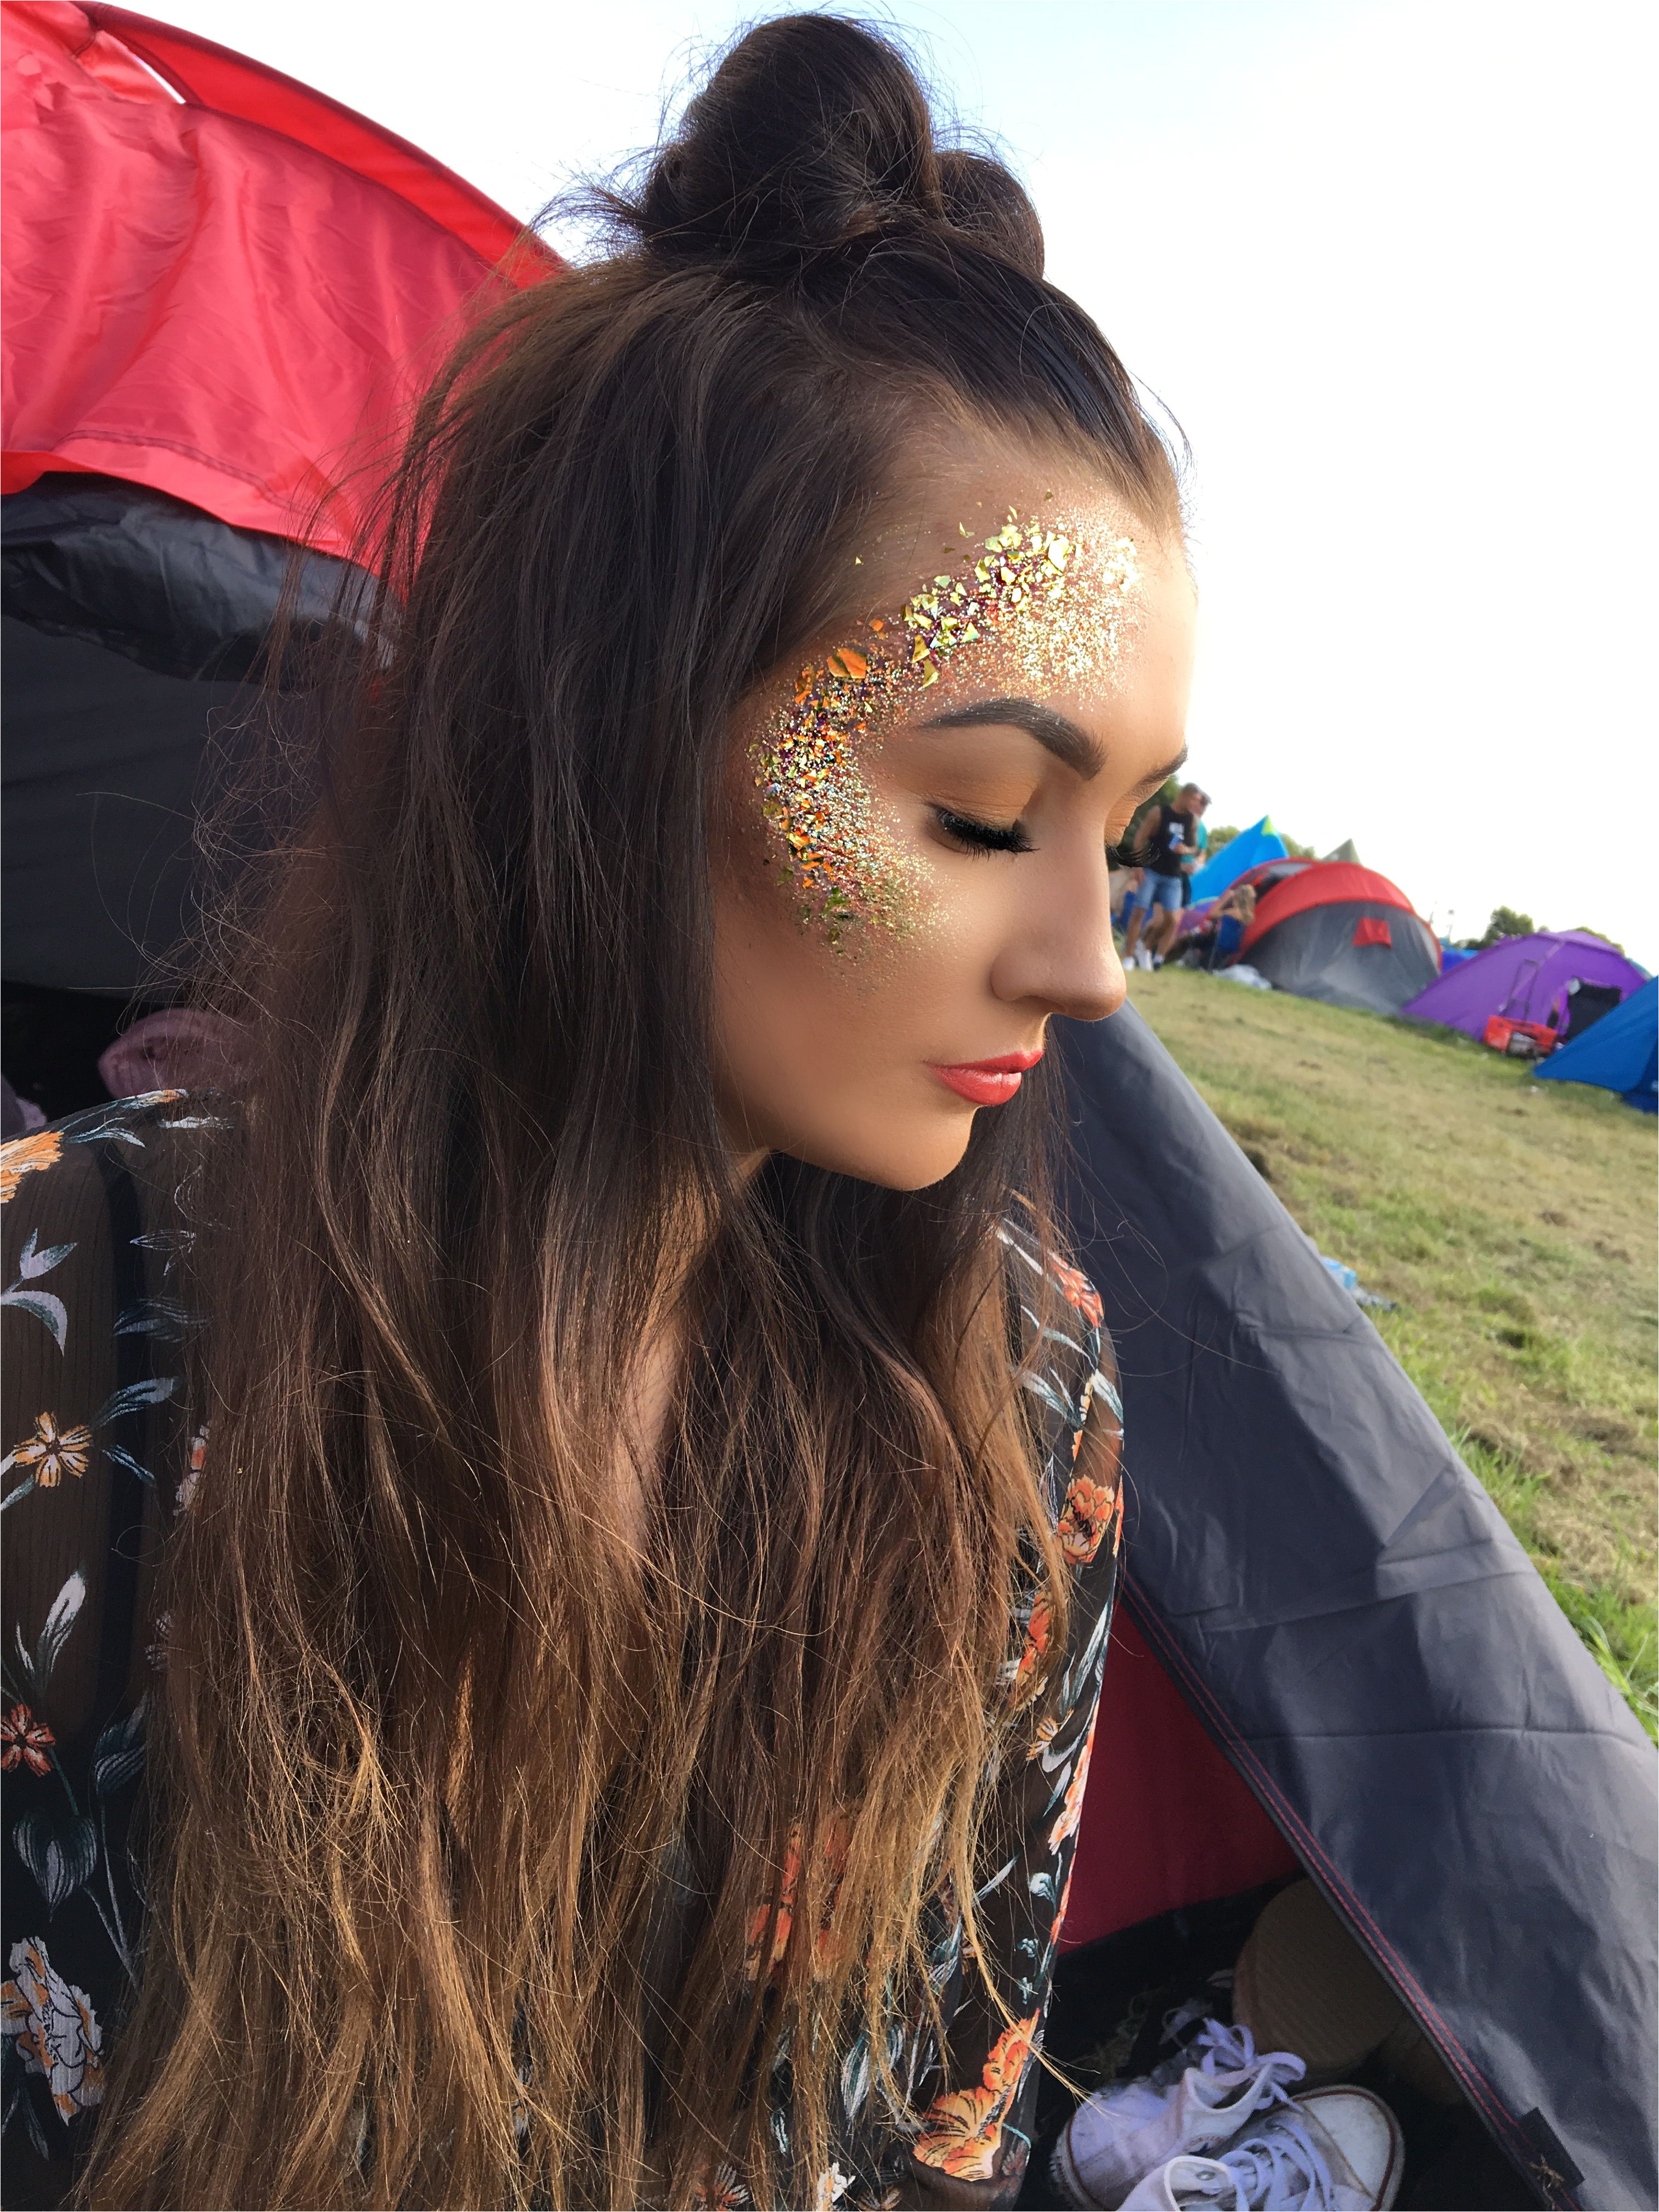 Glitter Festival Creamfields Space Buns Festival Makeup Outfits Festival Glitter Festival Look